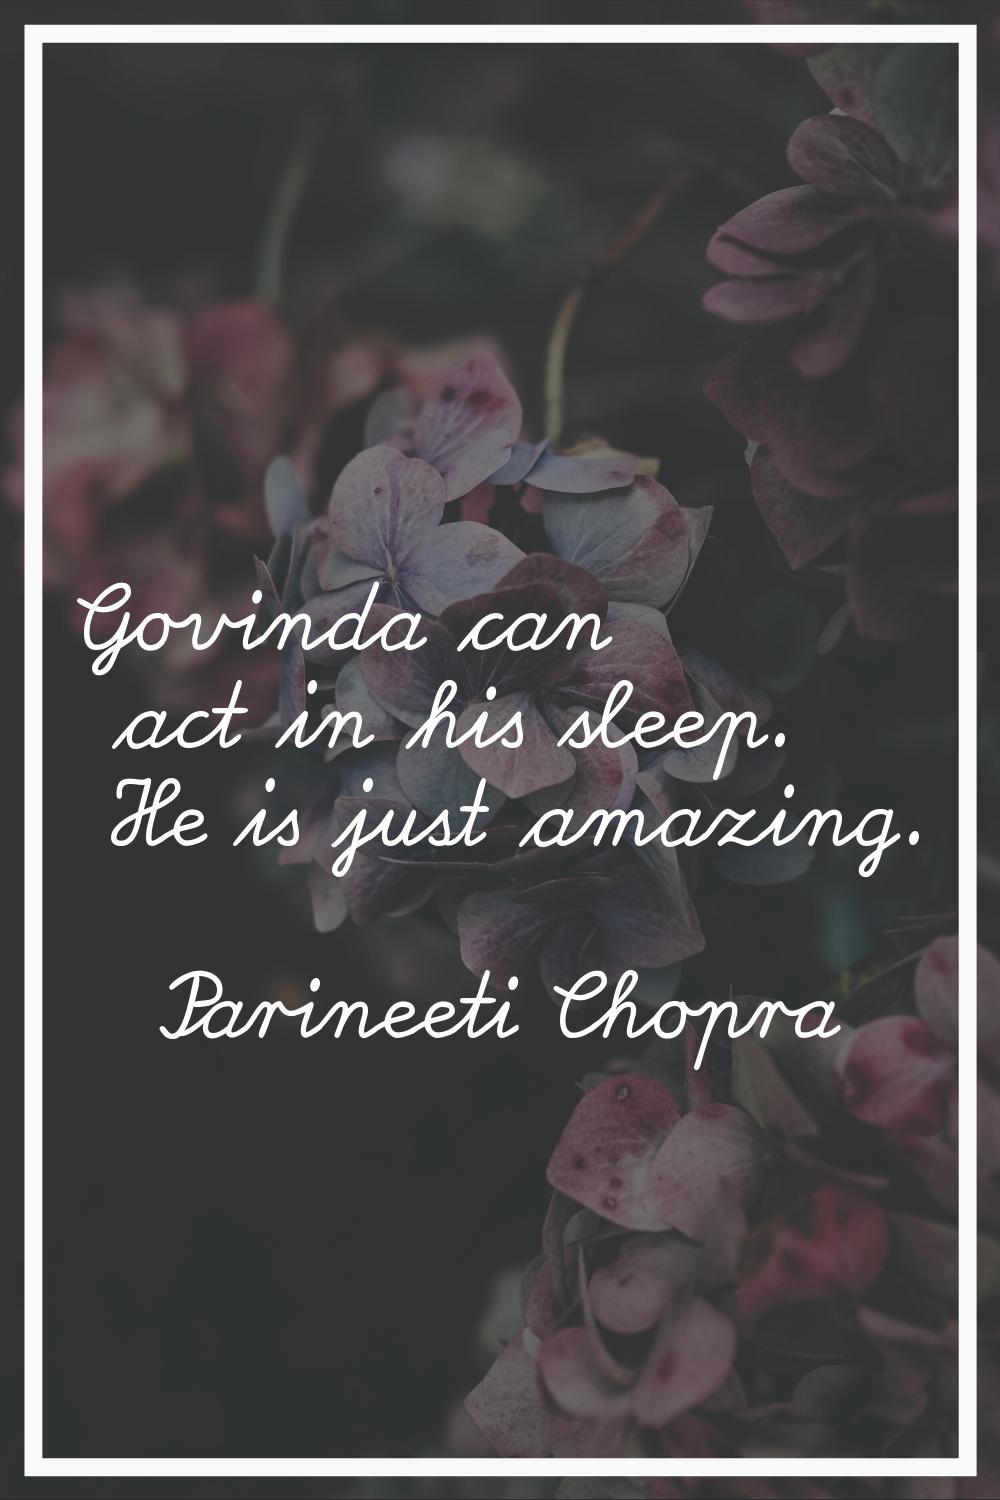 Govinda can act in his sleep. He is just amazing.